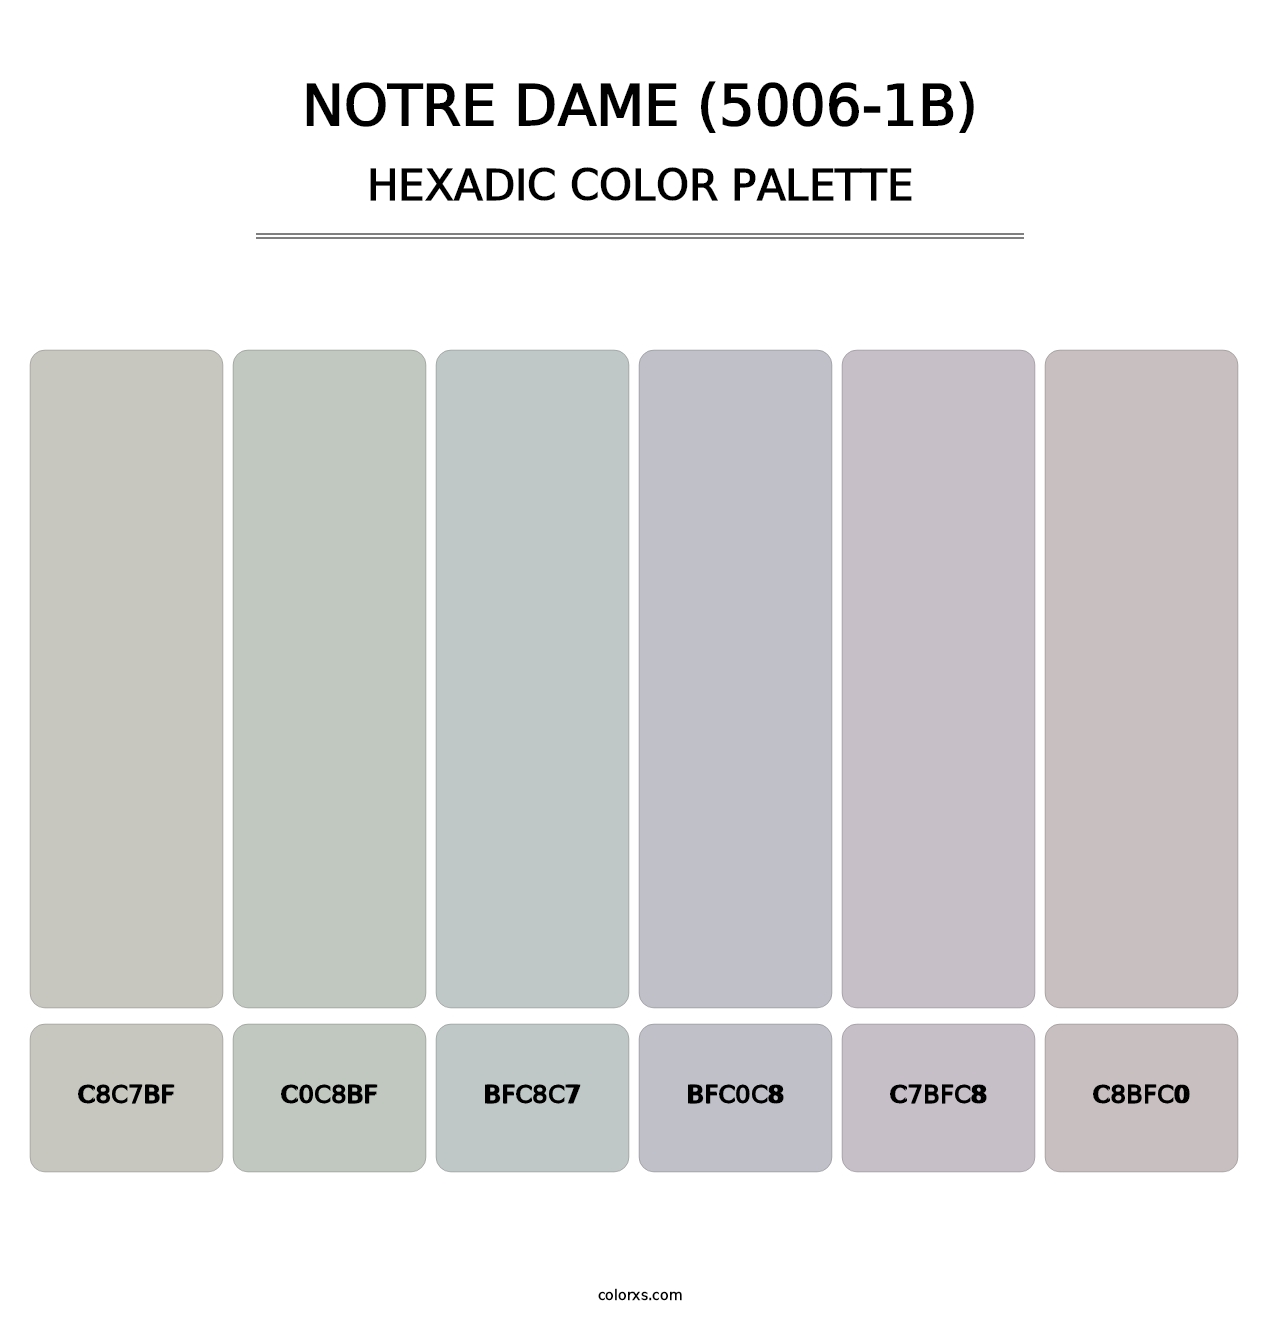 Notre Dame (5006-1B) - Hexadic Color Palette